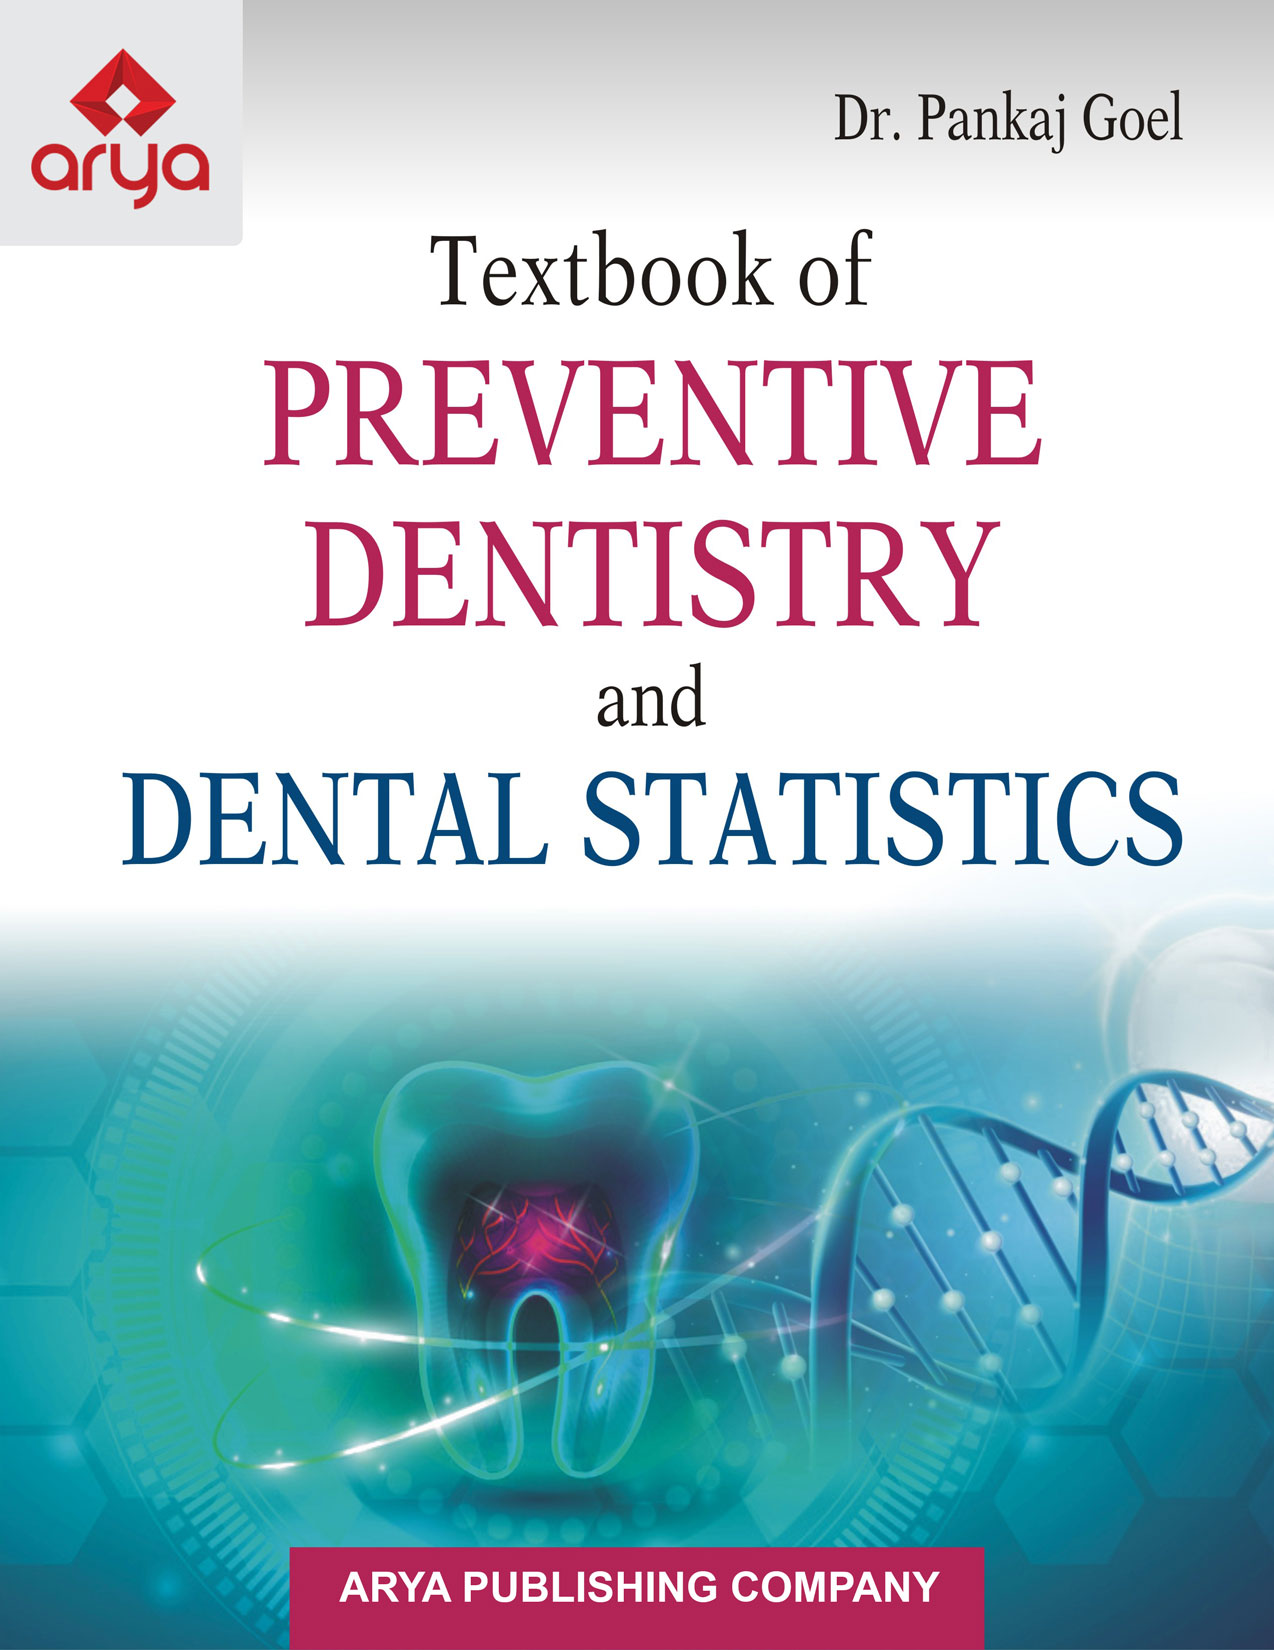 Textbook of Preventive Dentistry and Dental Statistics